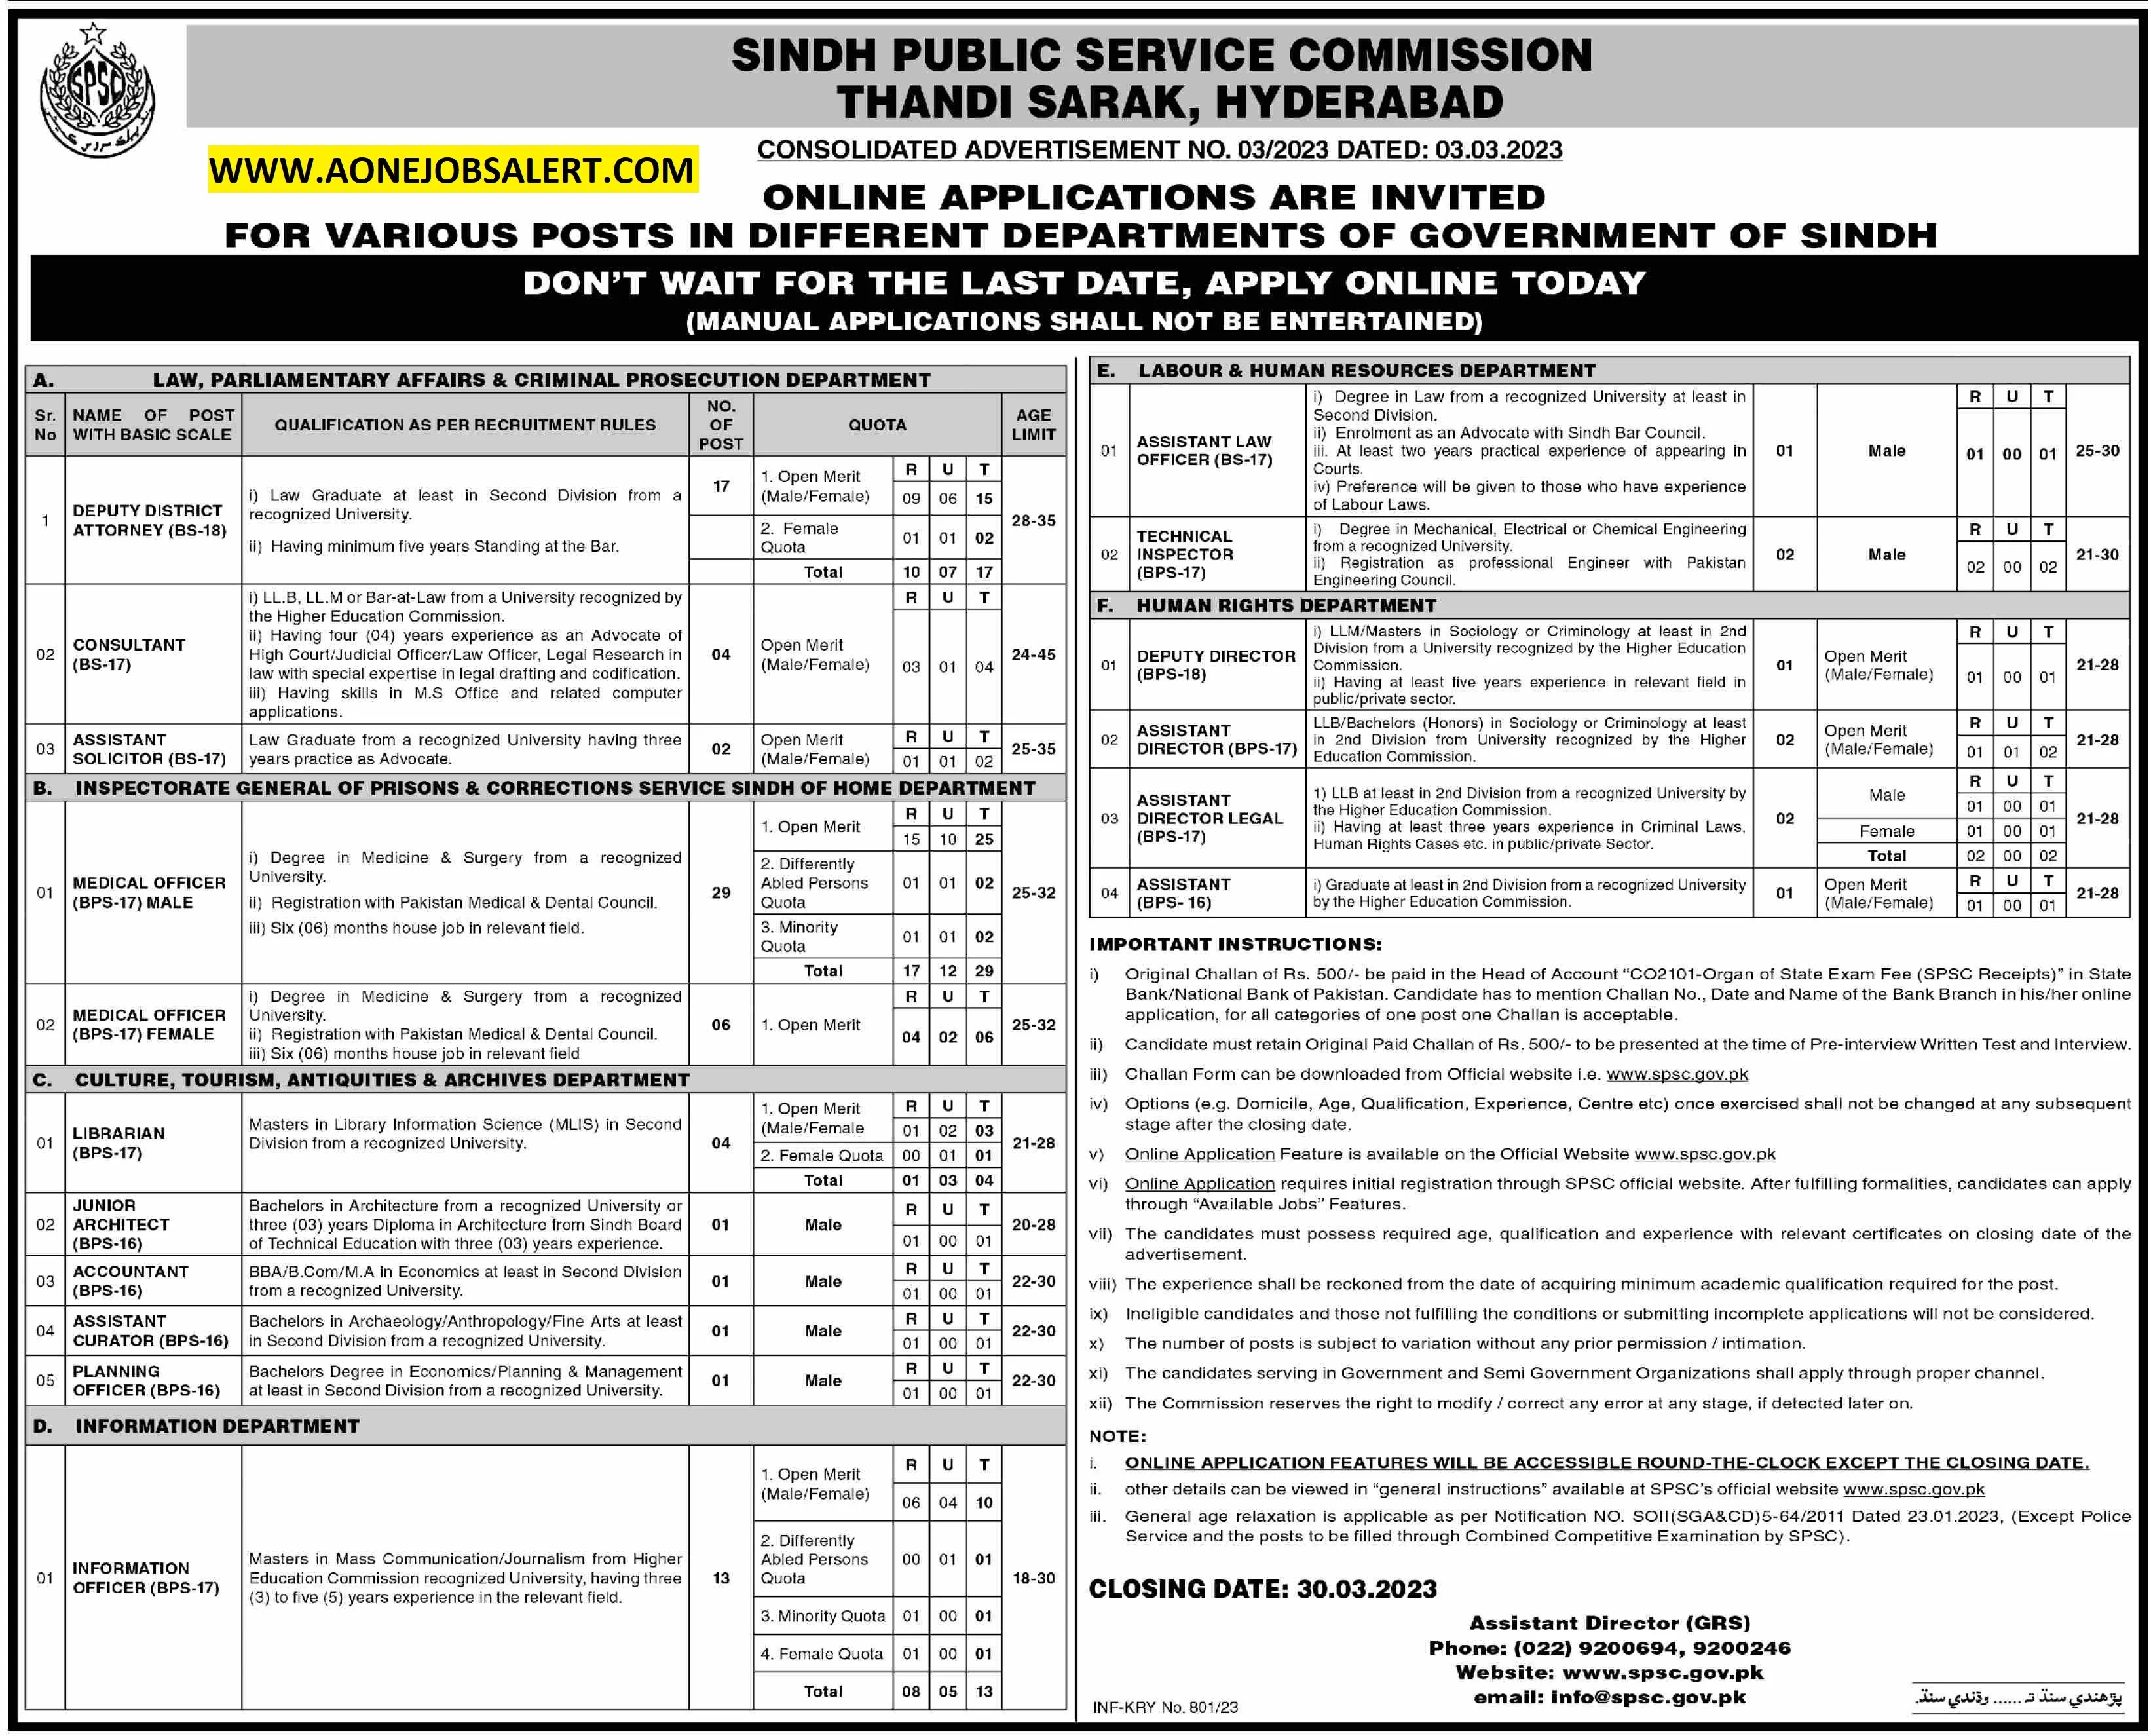 SPSC Sindh Public Service Commission Hyderabad Jobs 2023